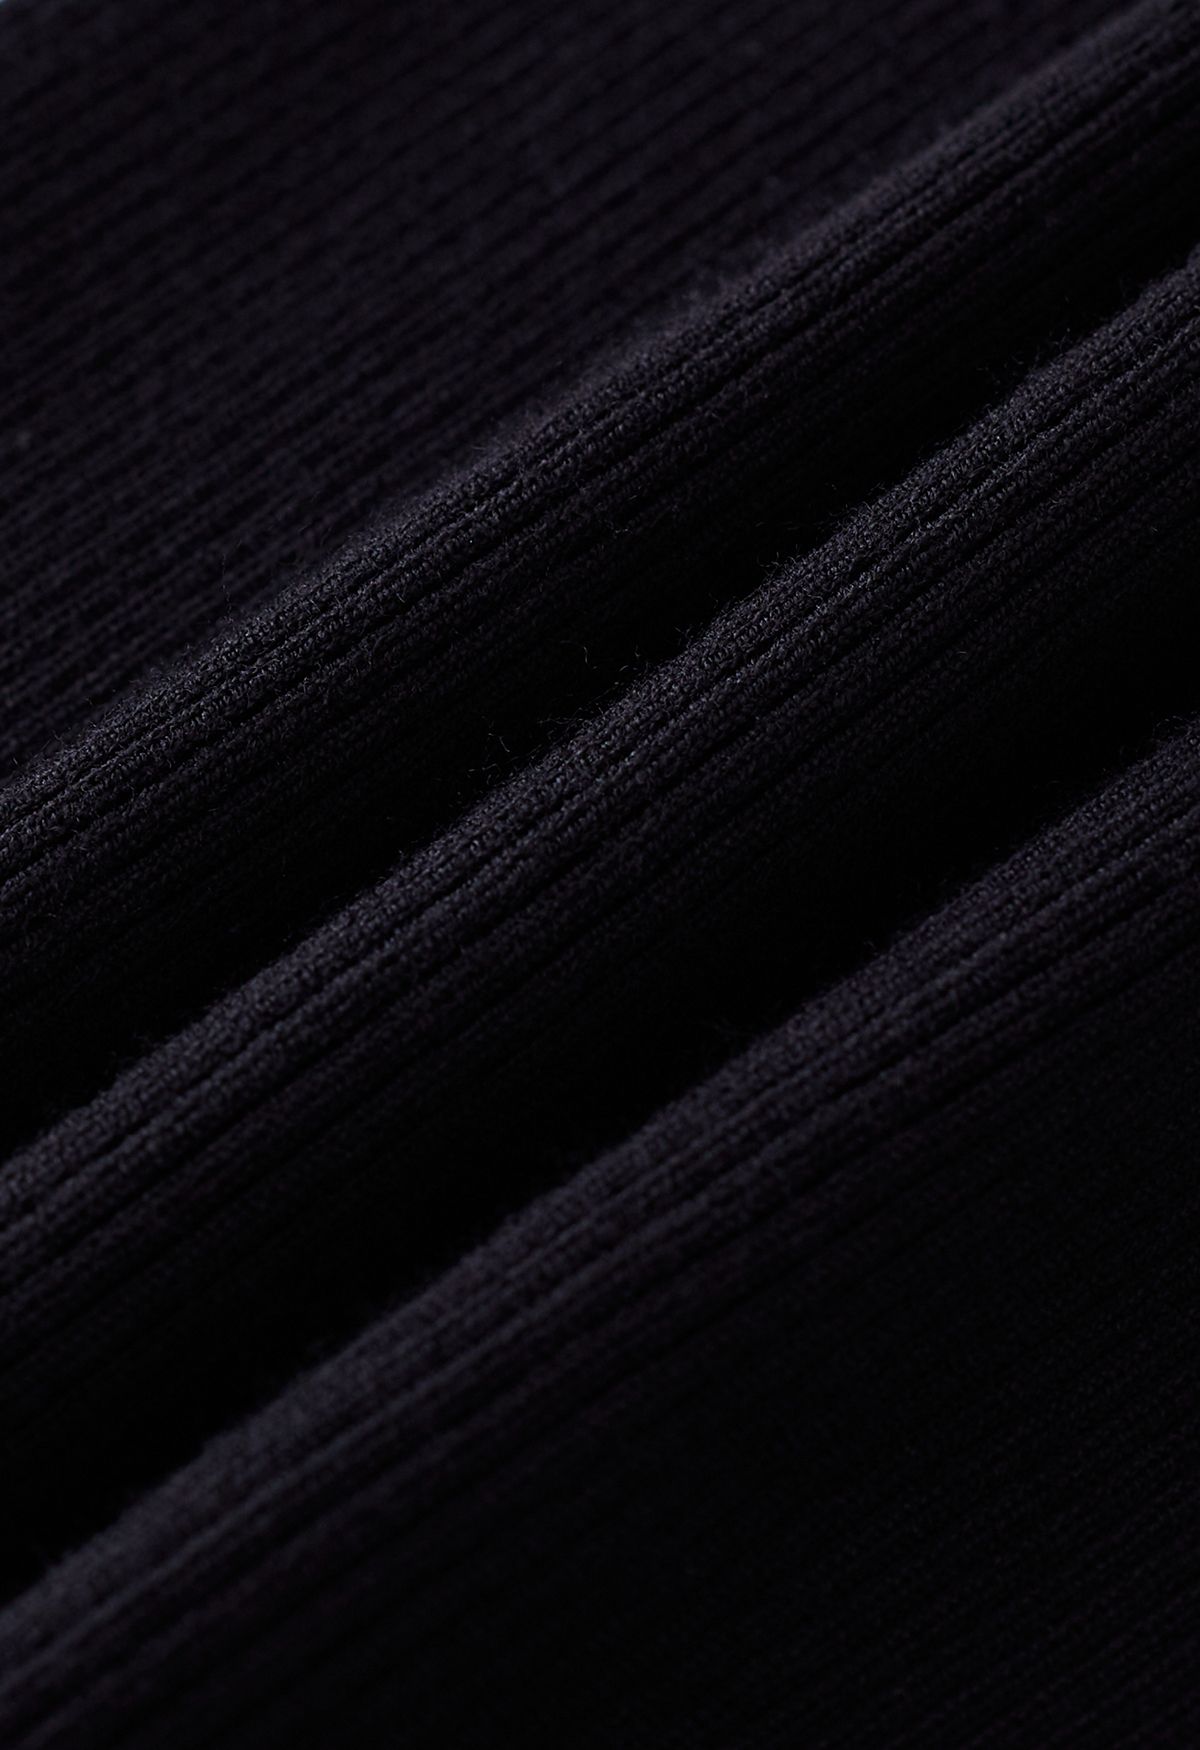 Twist Front Faux Two-Piece Knit Top in Black